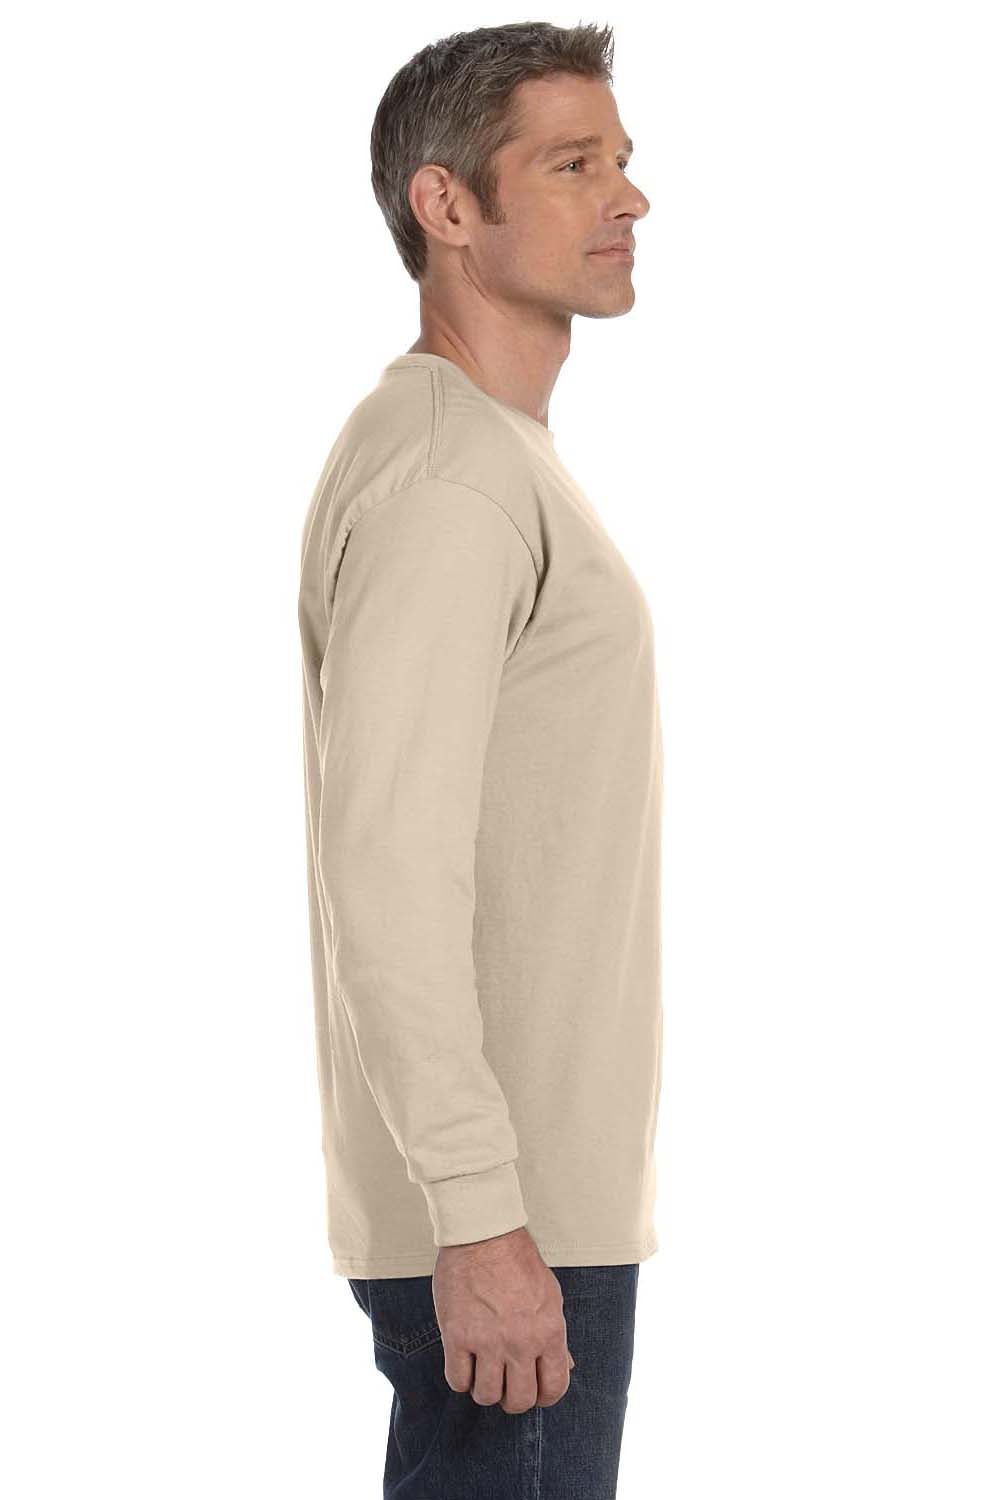 Jerzees 29L Mens Dri-Power Moisture Wicking Long Sleeve Crewneck T-Shirt Sandstone Brown Side